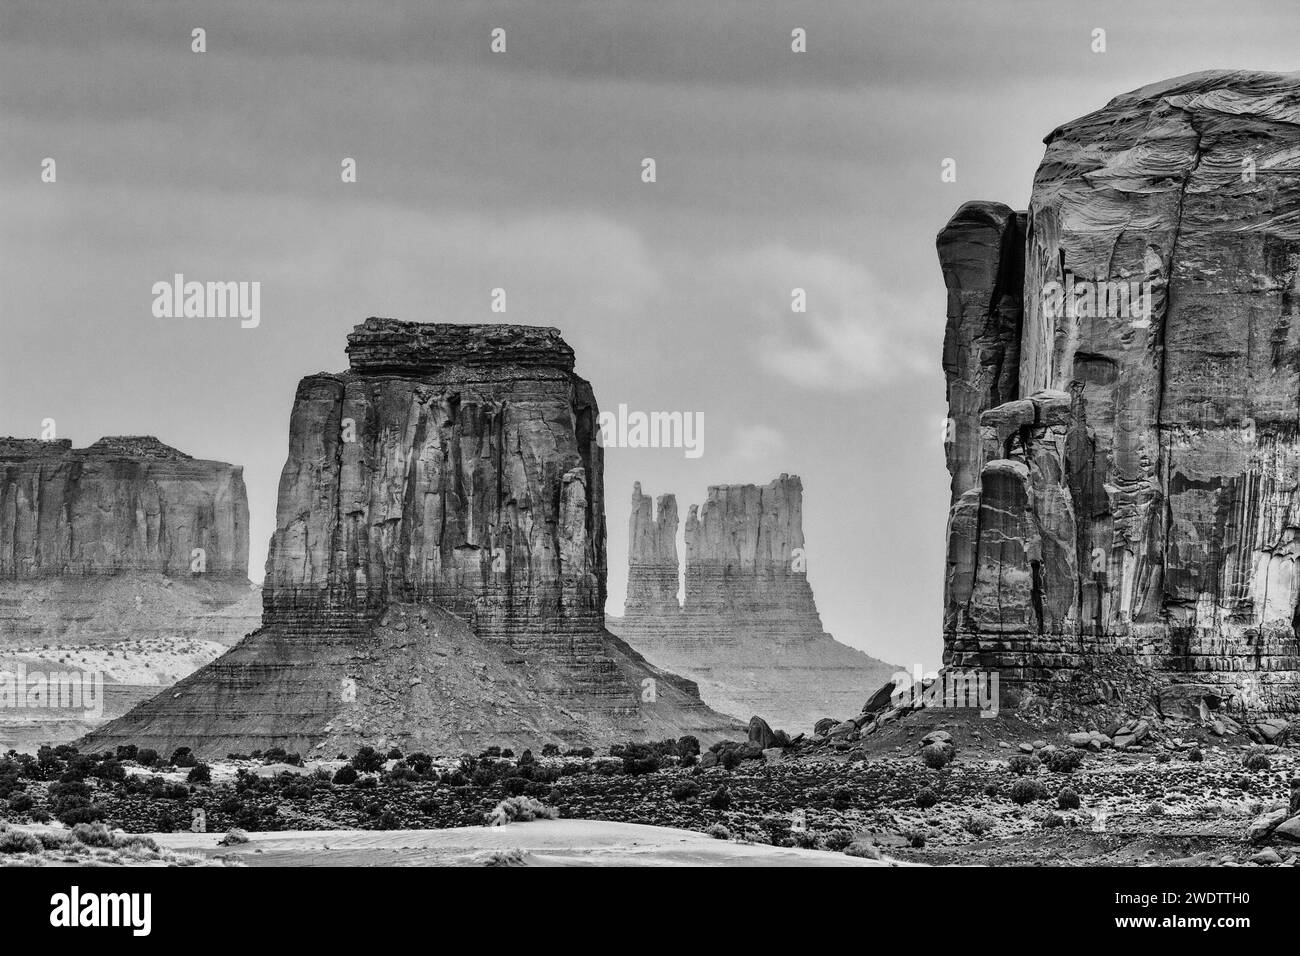 Blick auf die Denkmäler vom Sand Spring Area im Monument Valley Navajo Tribal Park in Arizona. Stockfoto